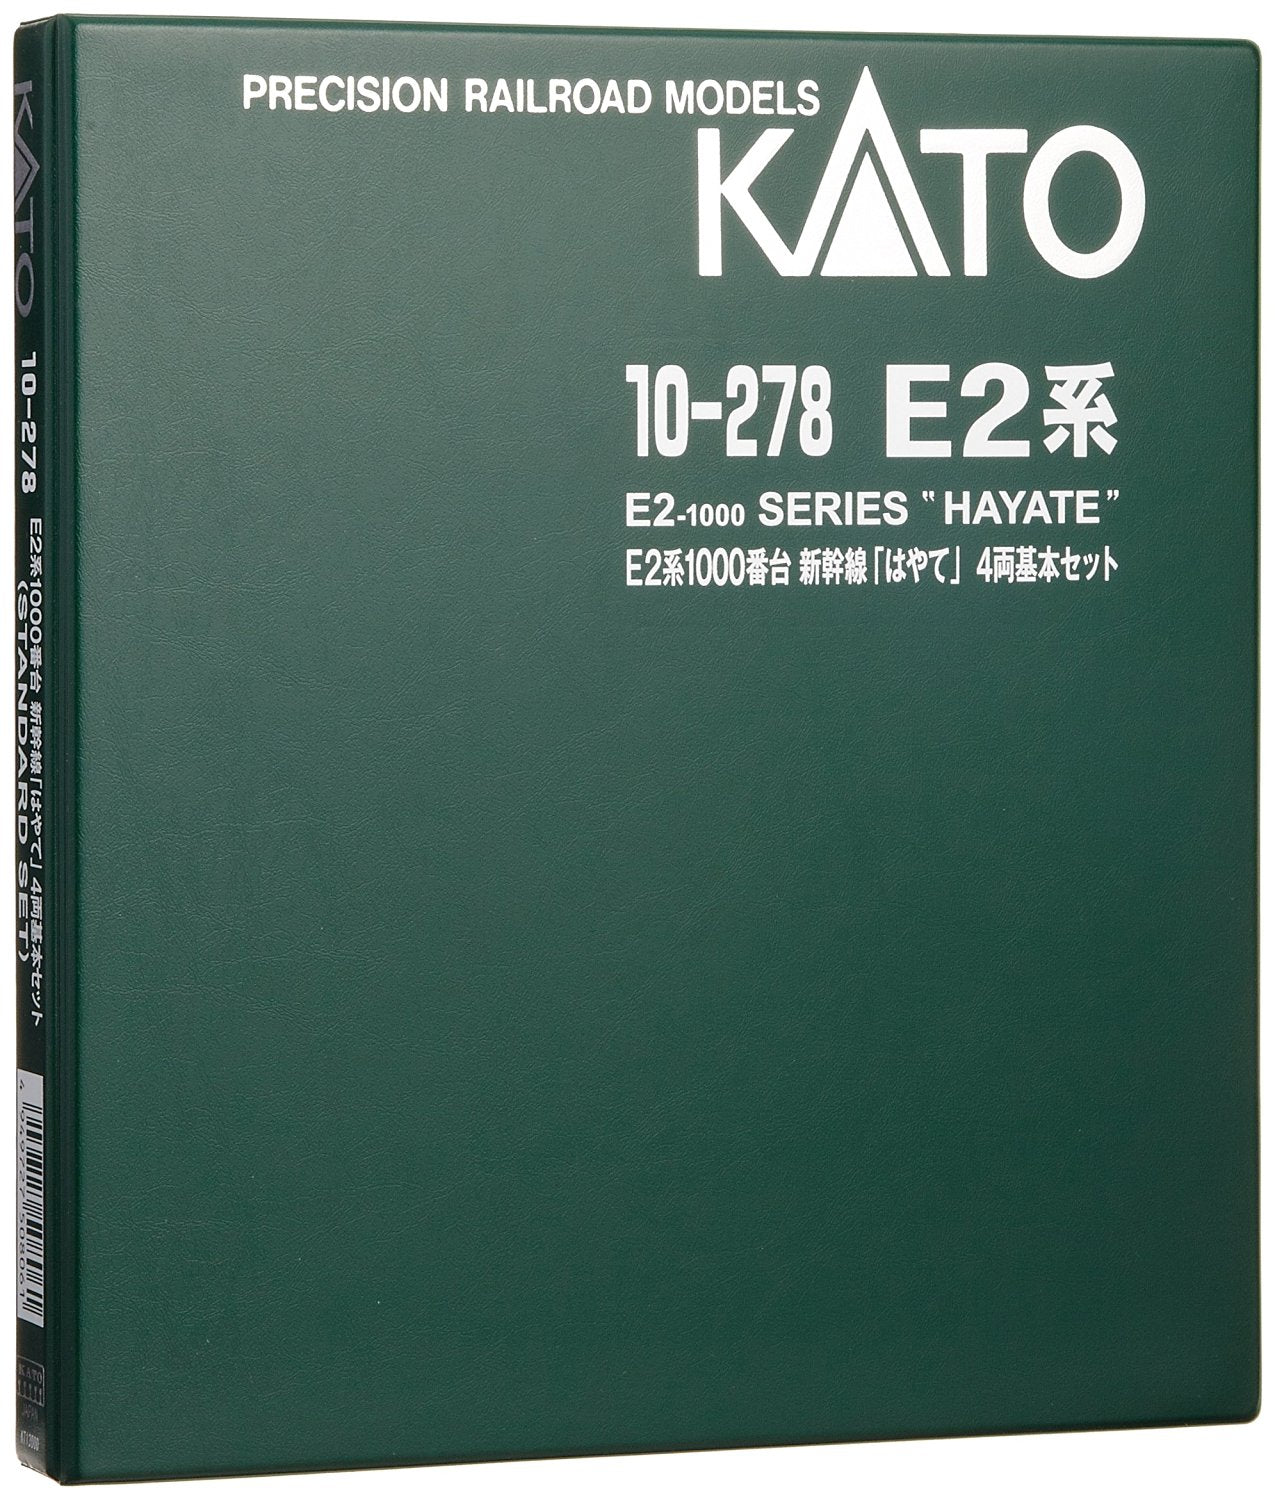 10-278 Series E2-1000 Shinkansen Hayate: Basic 4-Car Set